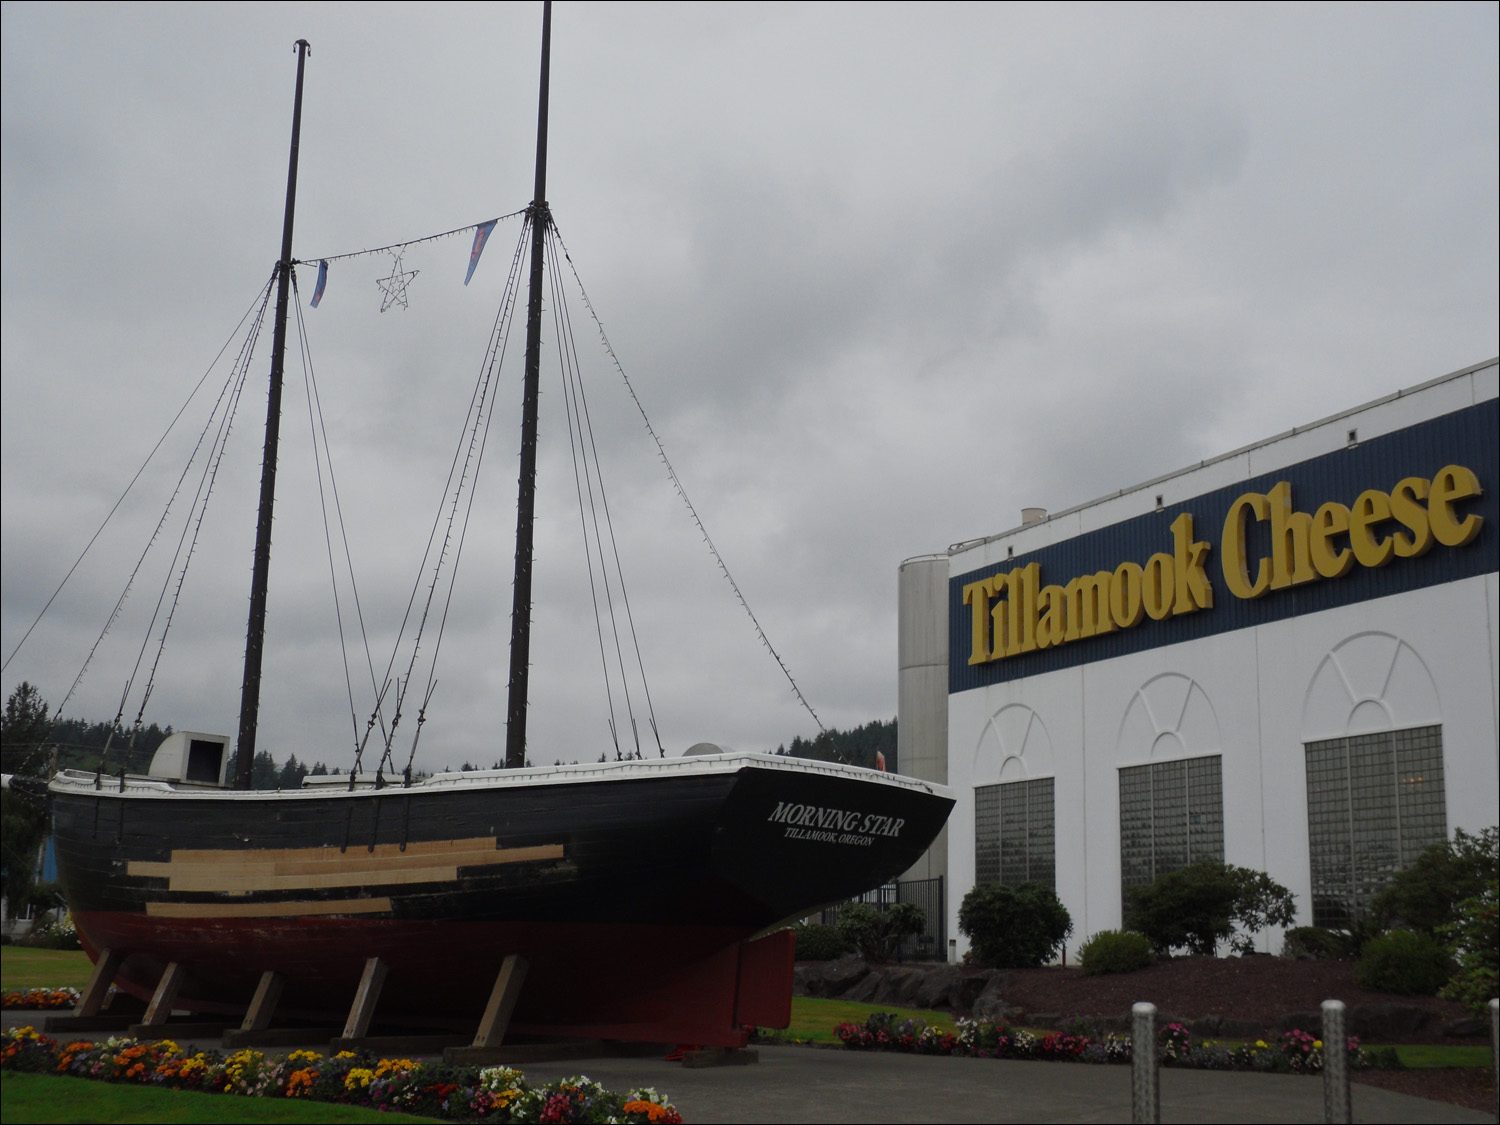 Tillamook, OR-Photos take @ Tillamook Cheese Factory~ The Tillamook boat, shown on all packages of Tillamook cheese.